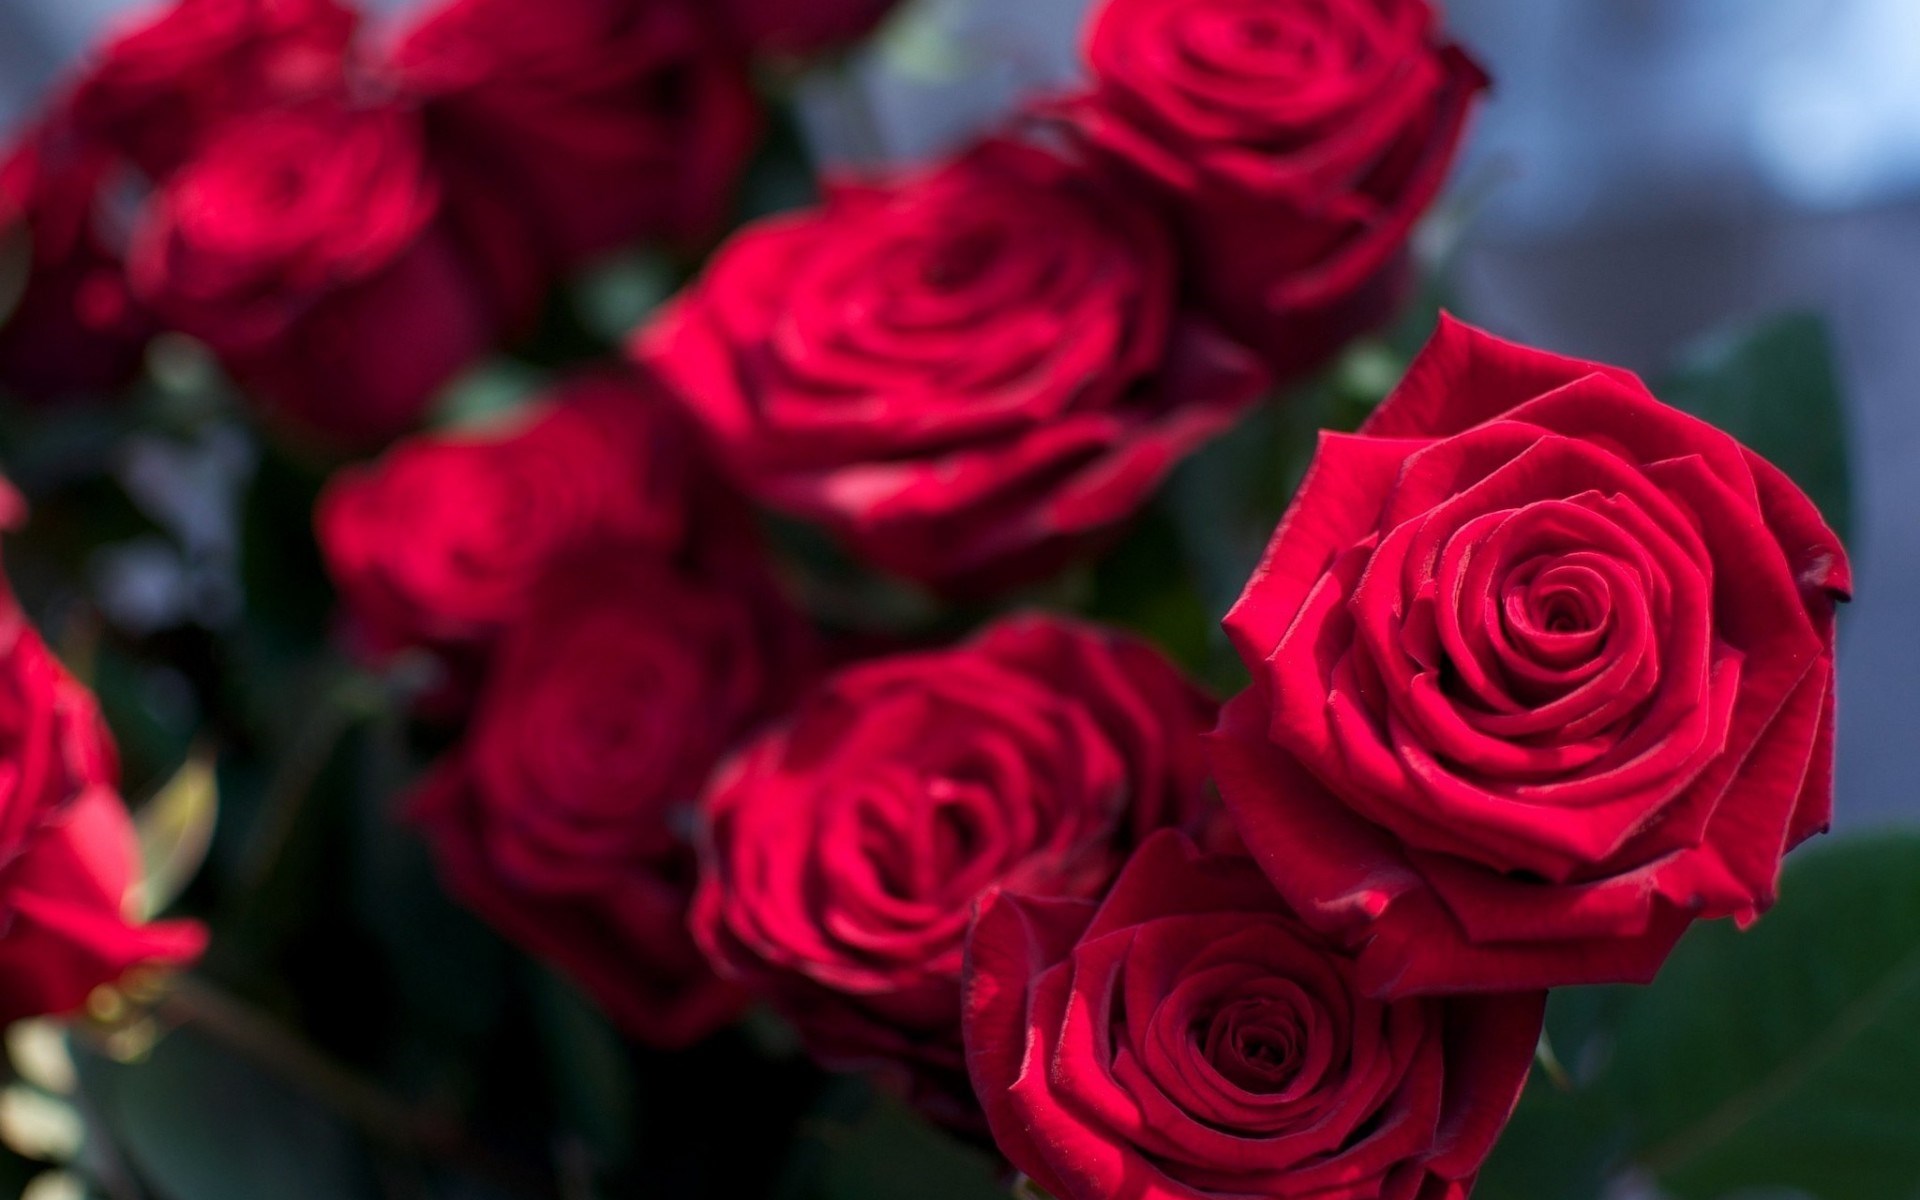 red roses wallpaper free download - HD Desktop Wallpapers ...